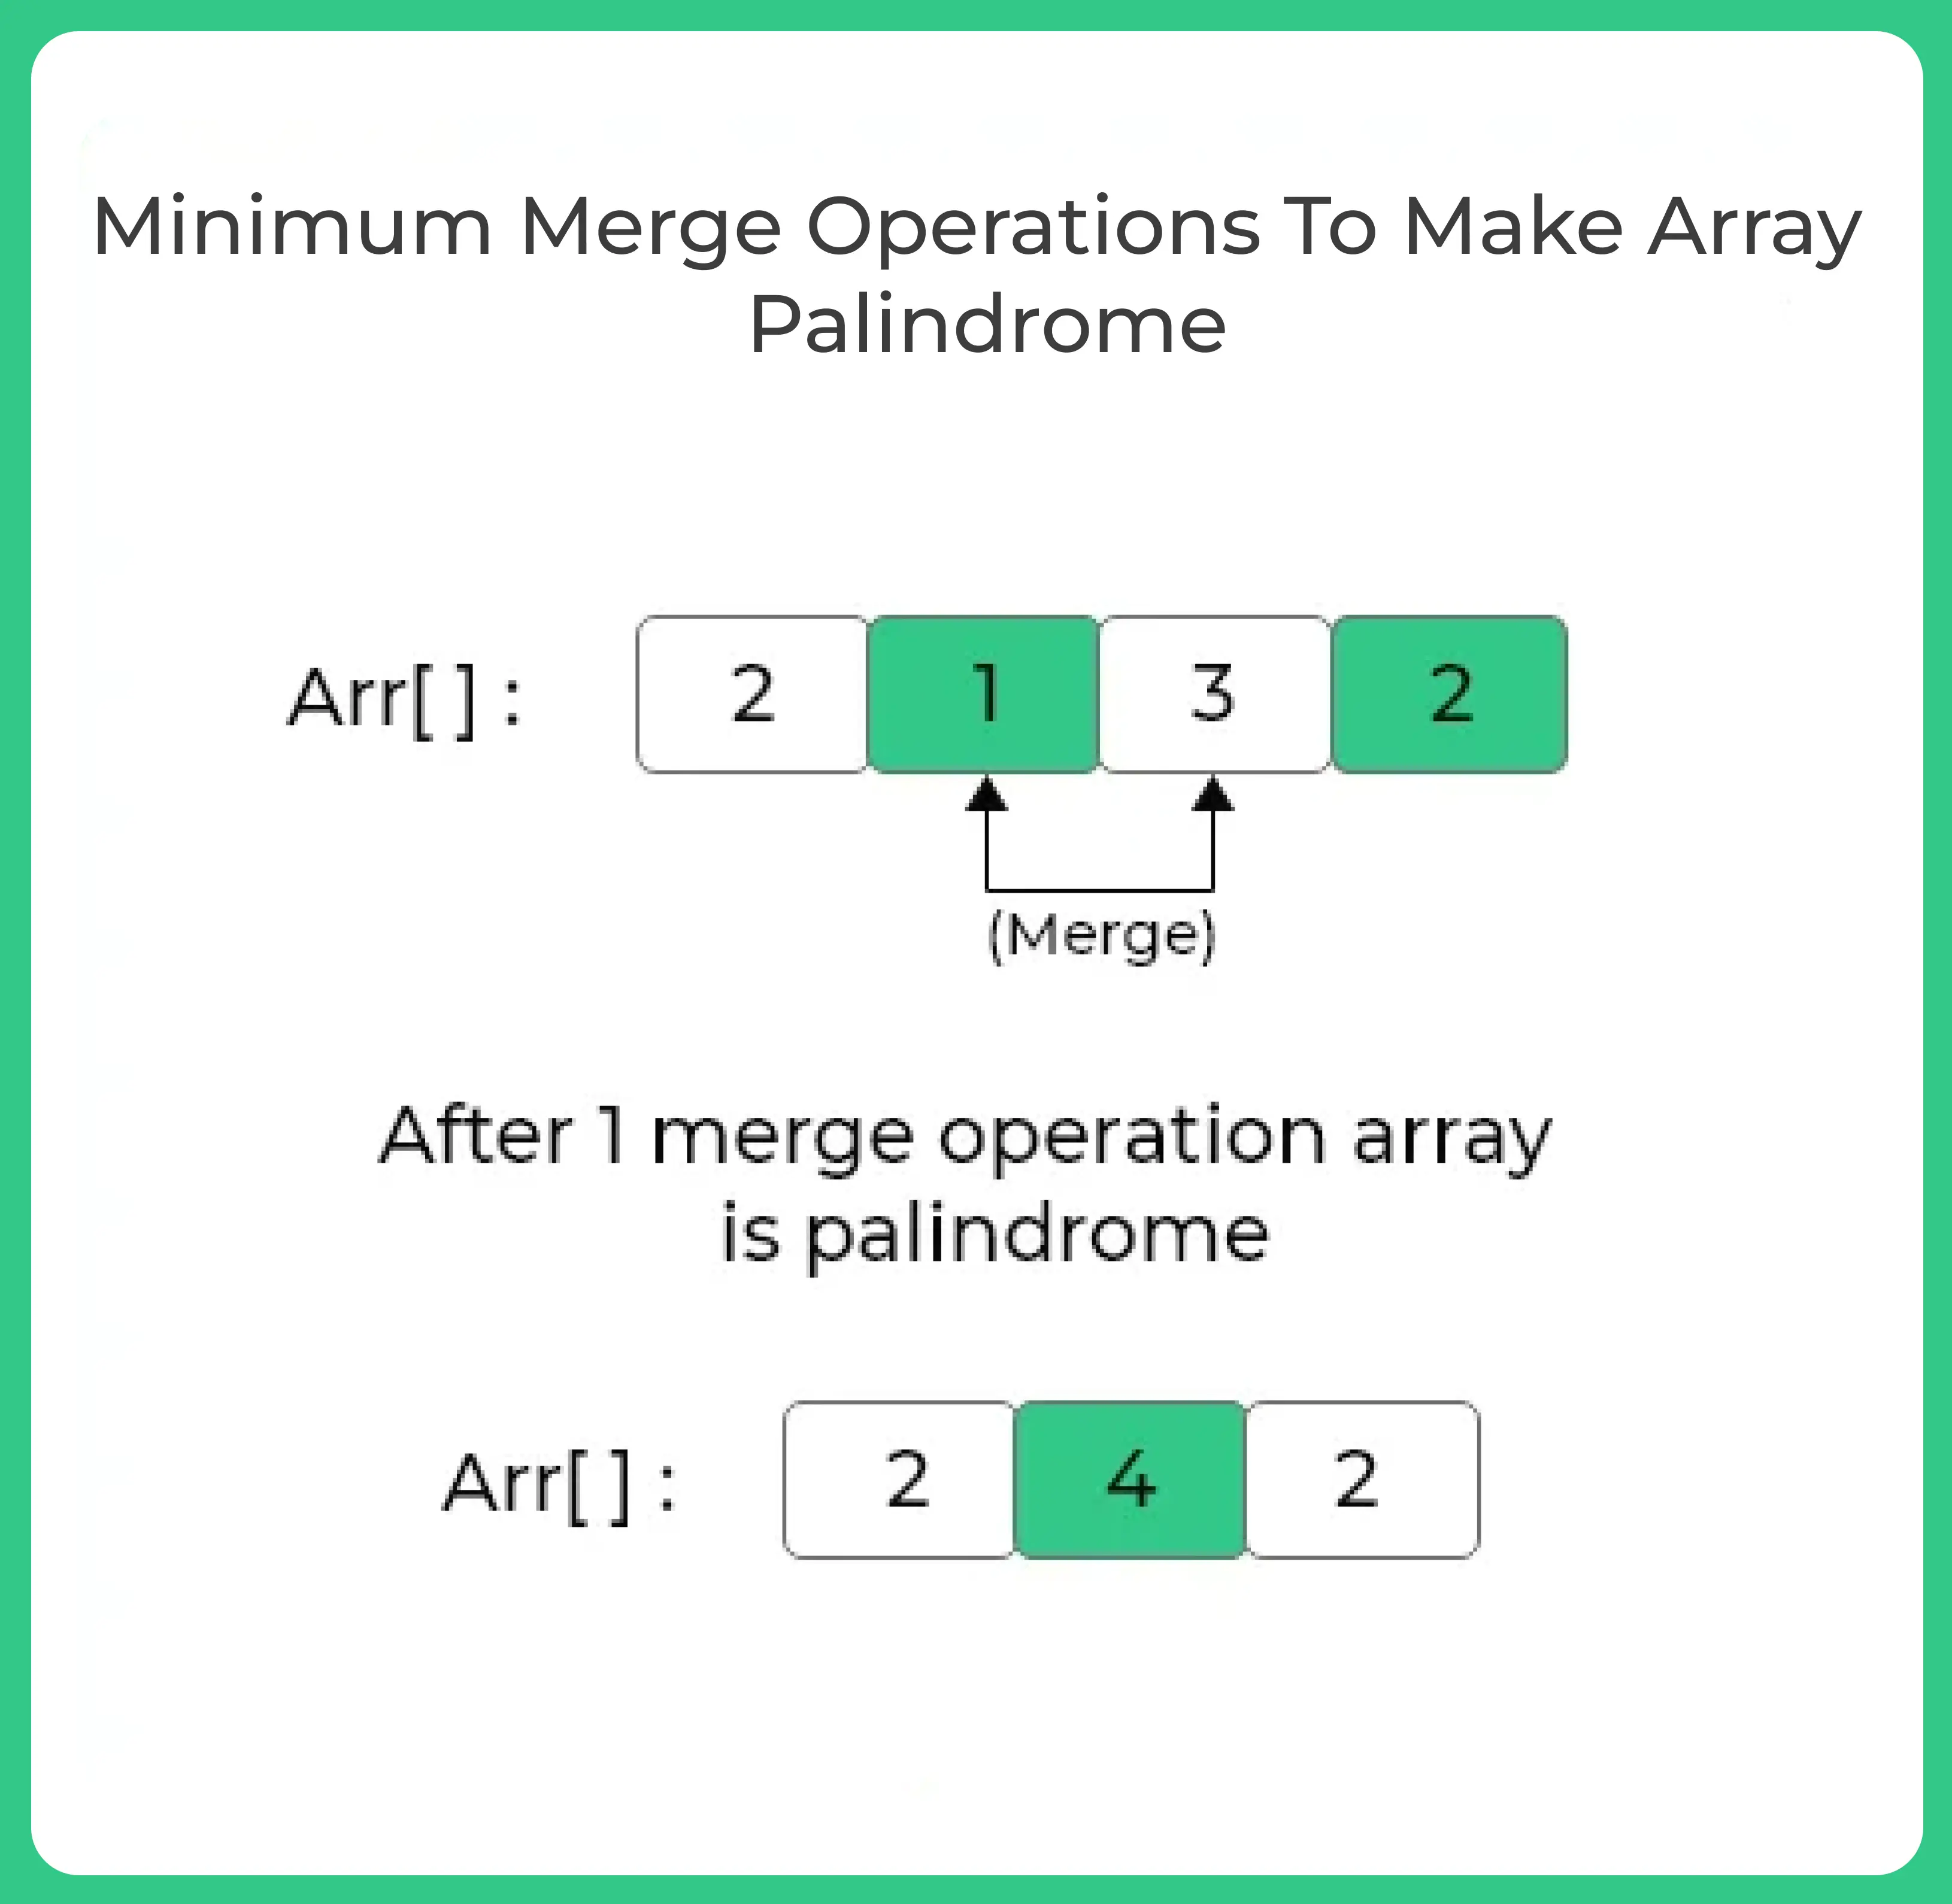 Minimum Merge Operations To Make Array Palindrome-1